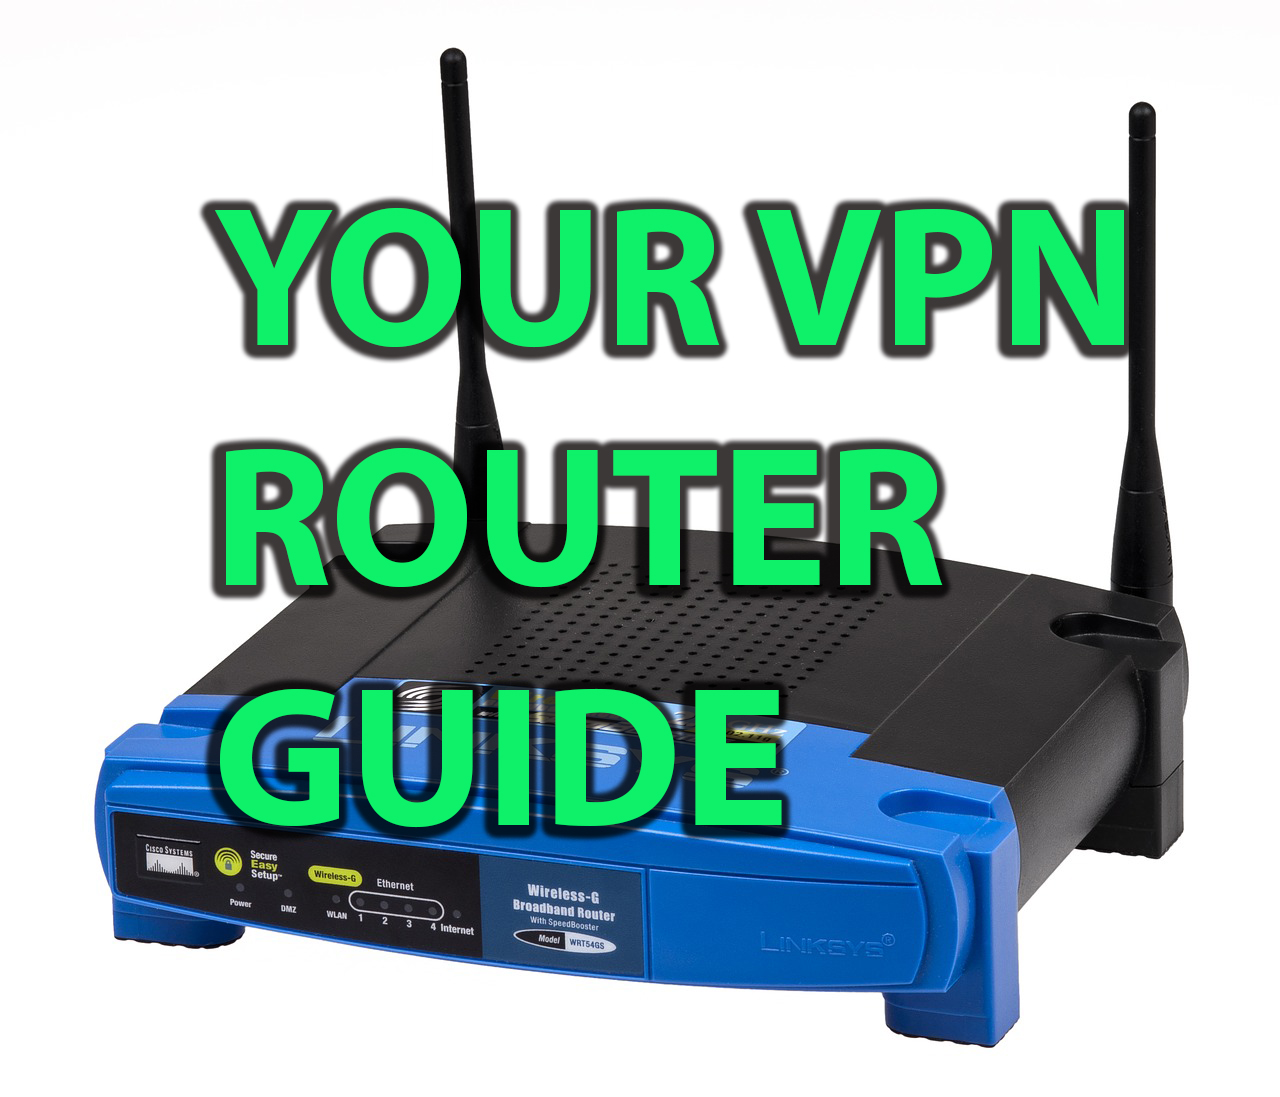 vpn router guide